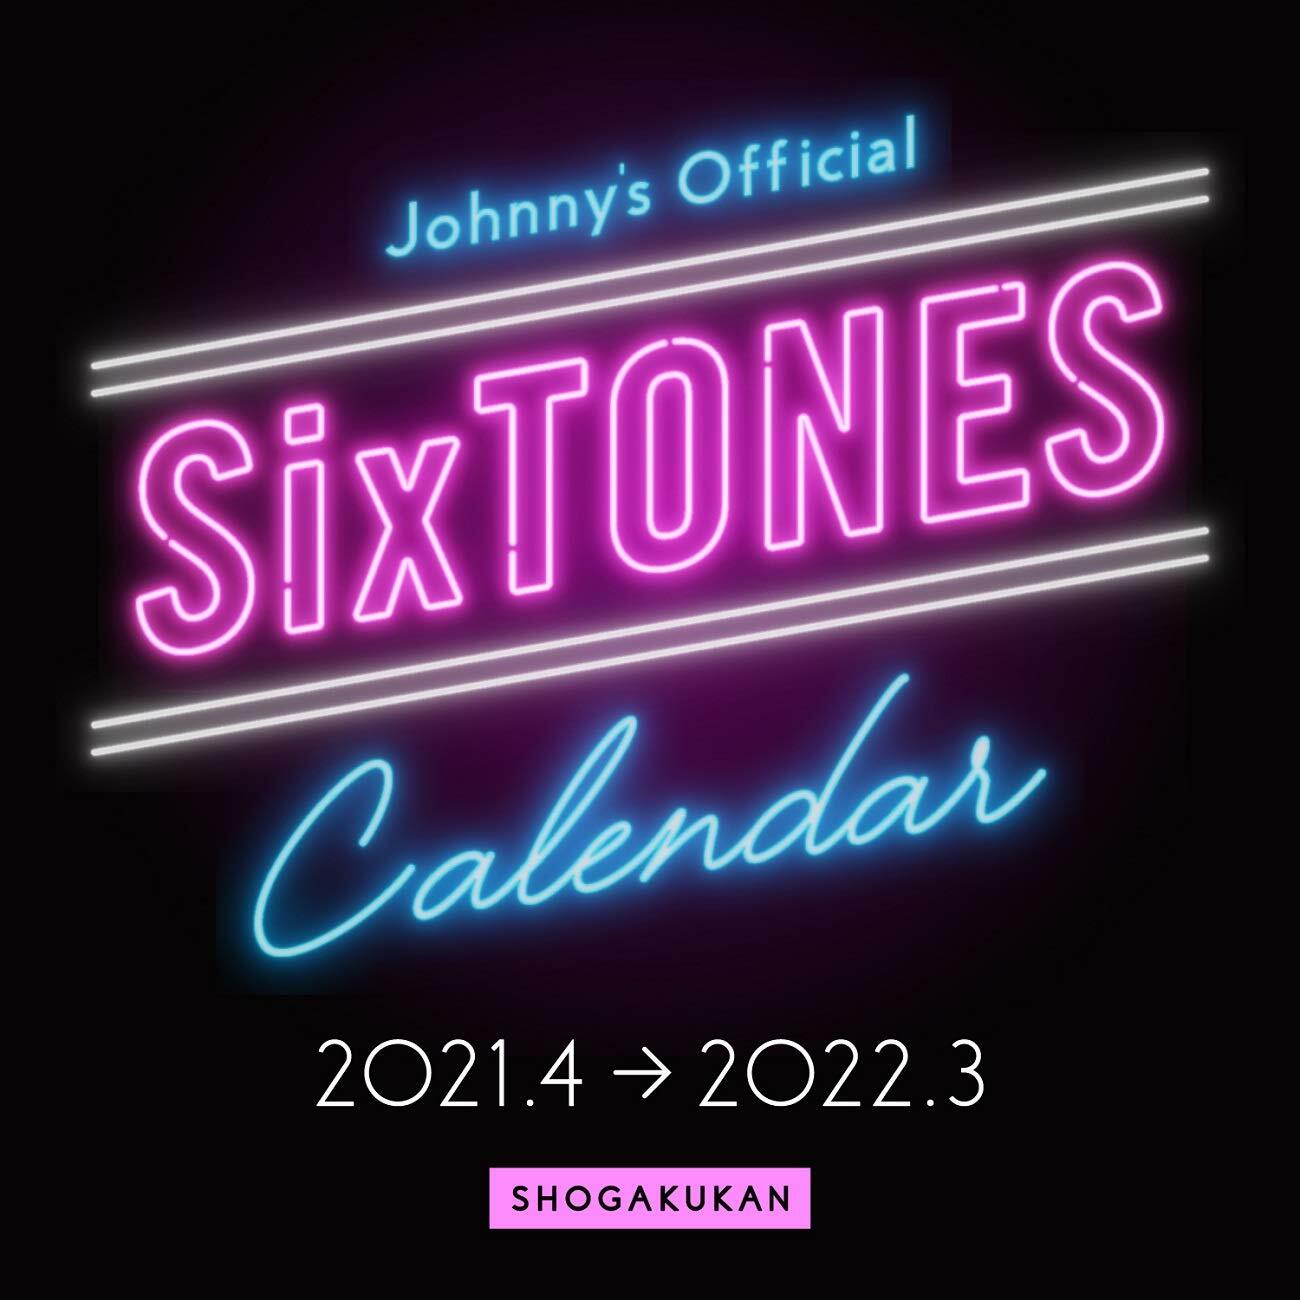 SixTONESカレンダ- 2021.4-2022.3 Johnnys Official